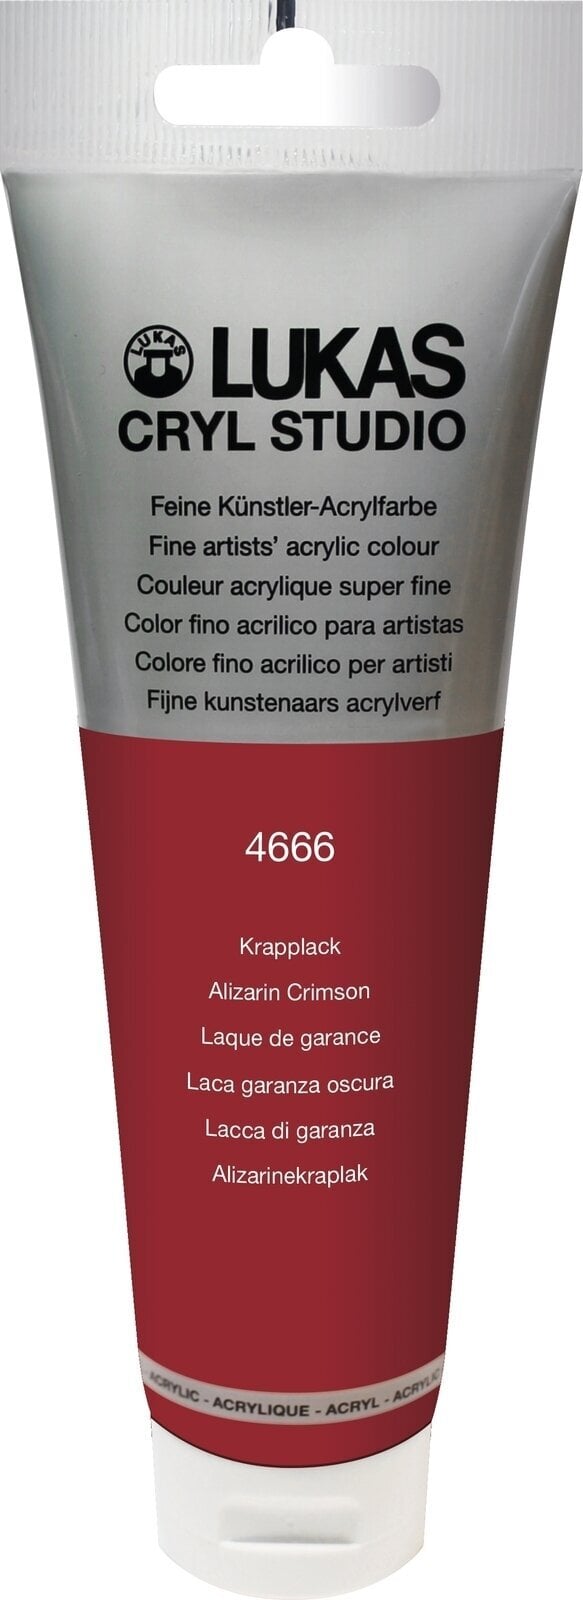 Akrylová barva Lukas Cryl Studio Acrylic Paint Plastic Tube Akrylová barva Alizarin Crimson 125 ml 1 ks